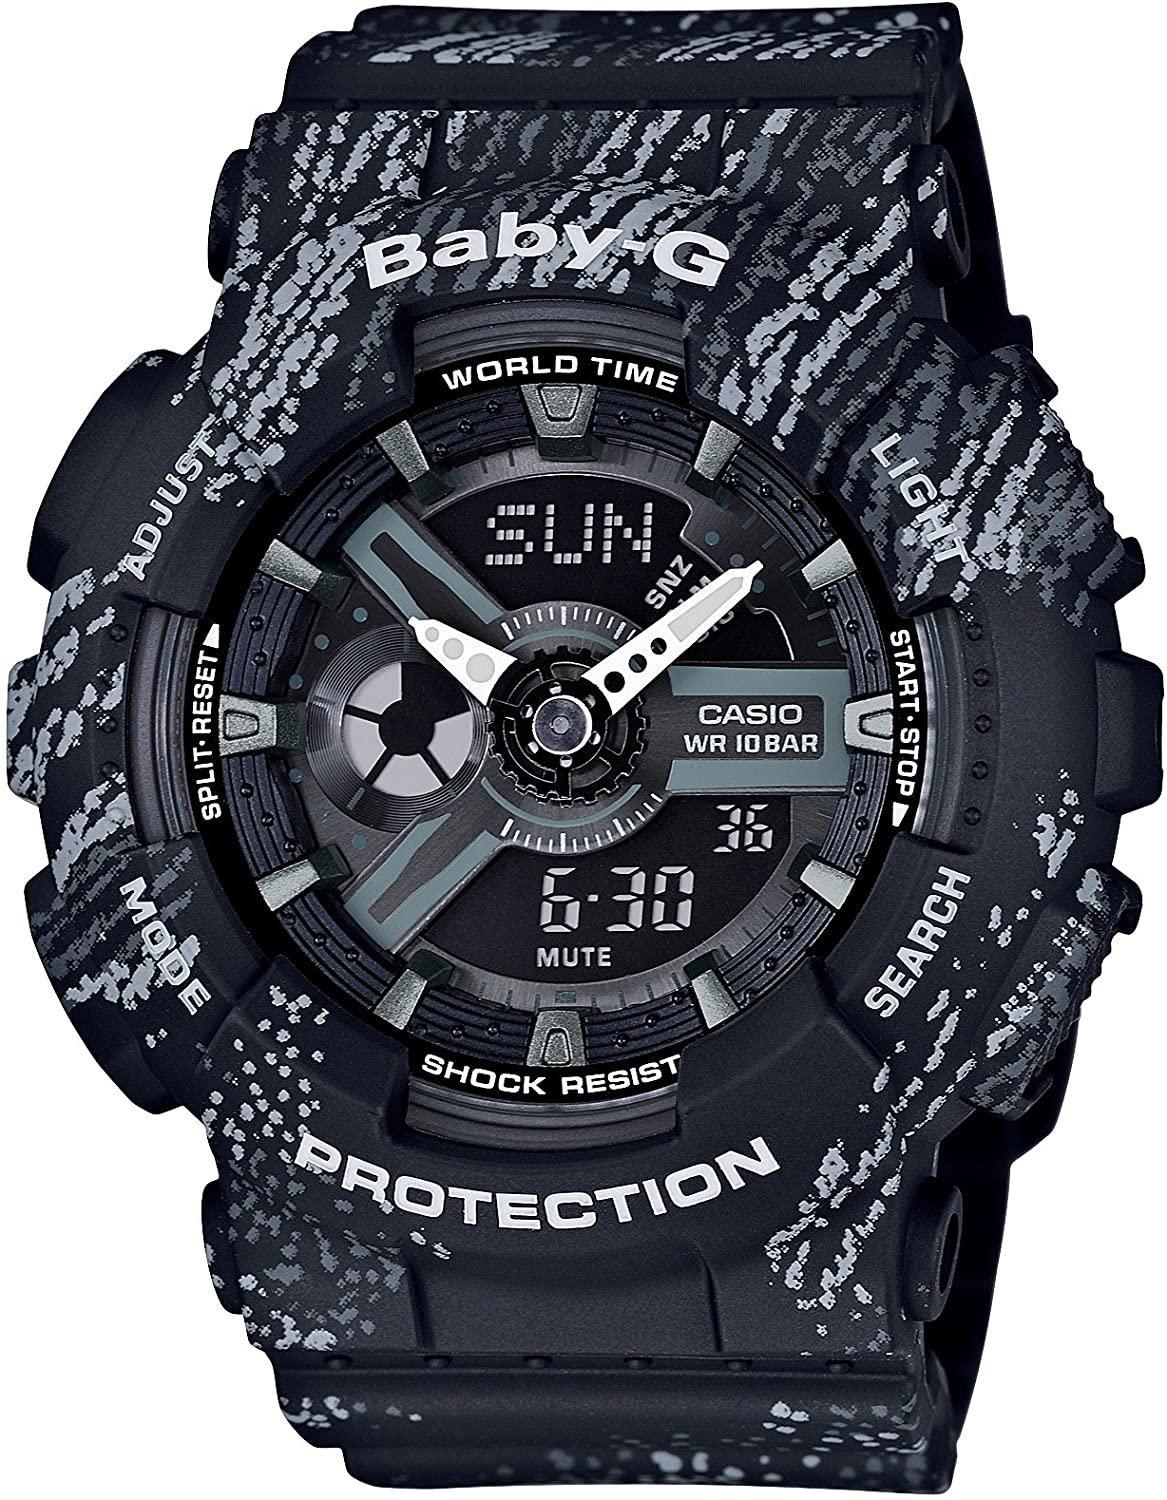 Casio Baby-G BA-110TX-1A Analog Digital Women's Watch Black